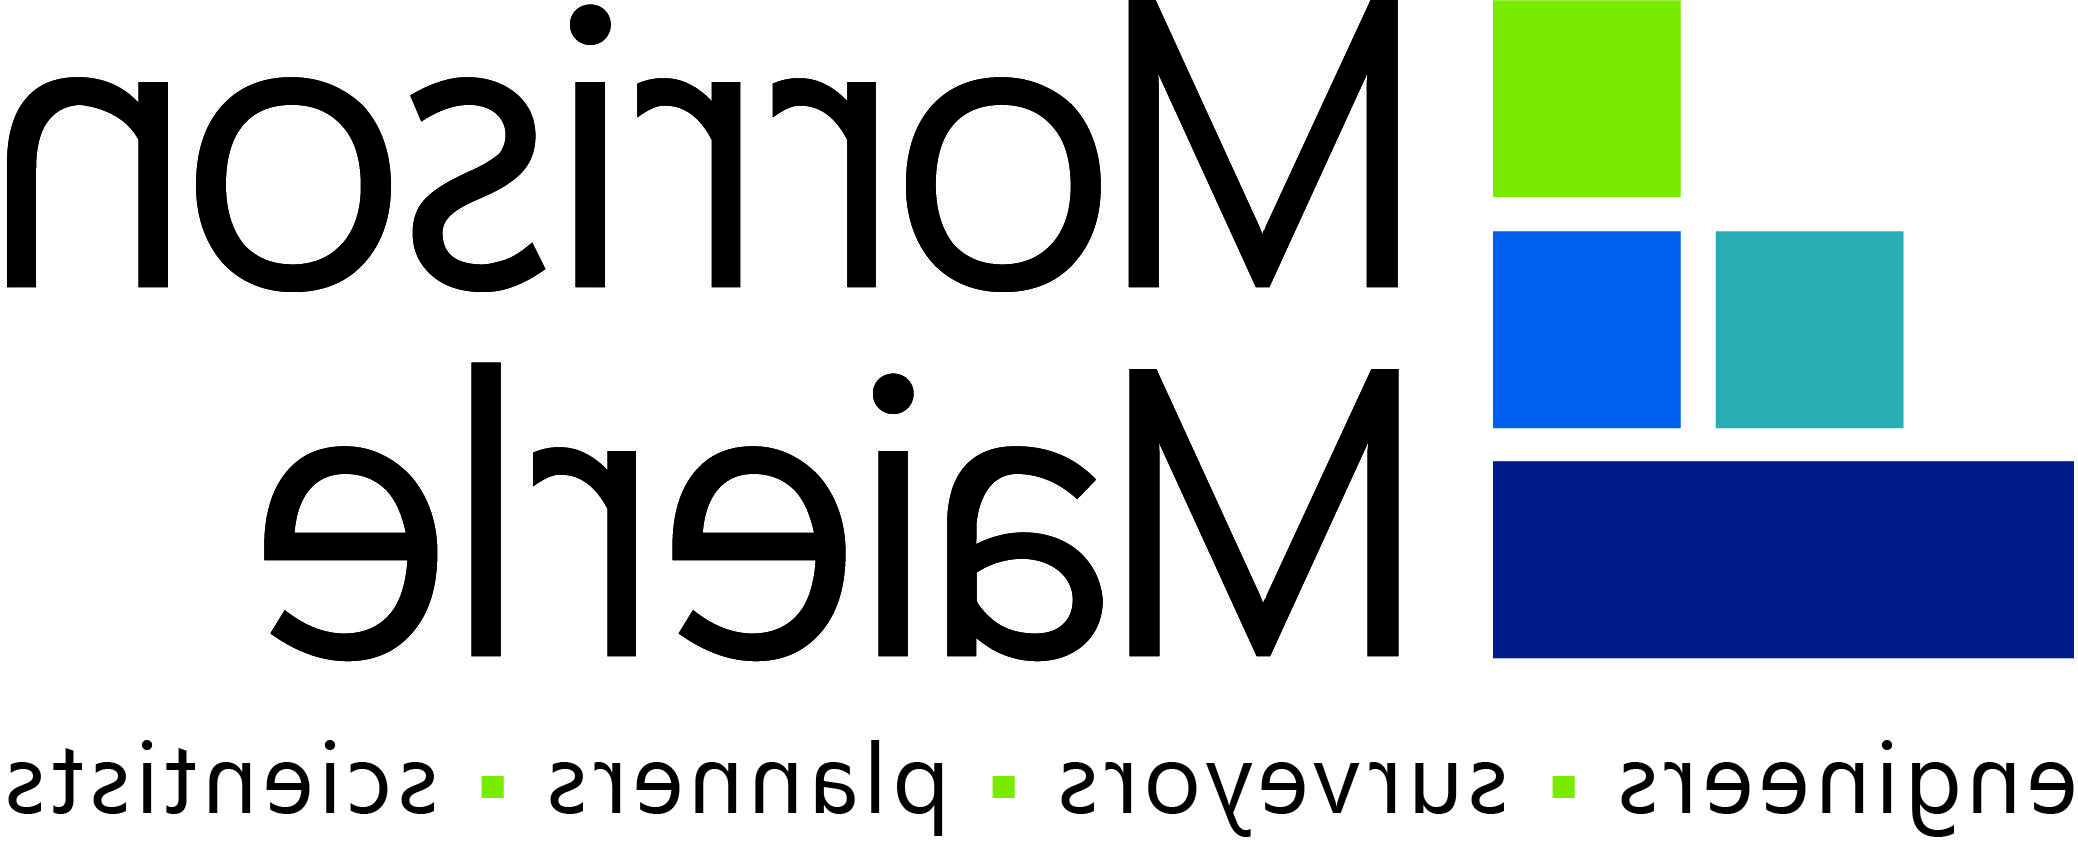 Morrision-Maierle logo